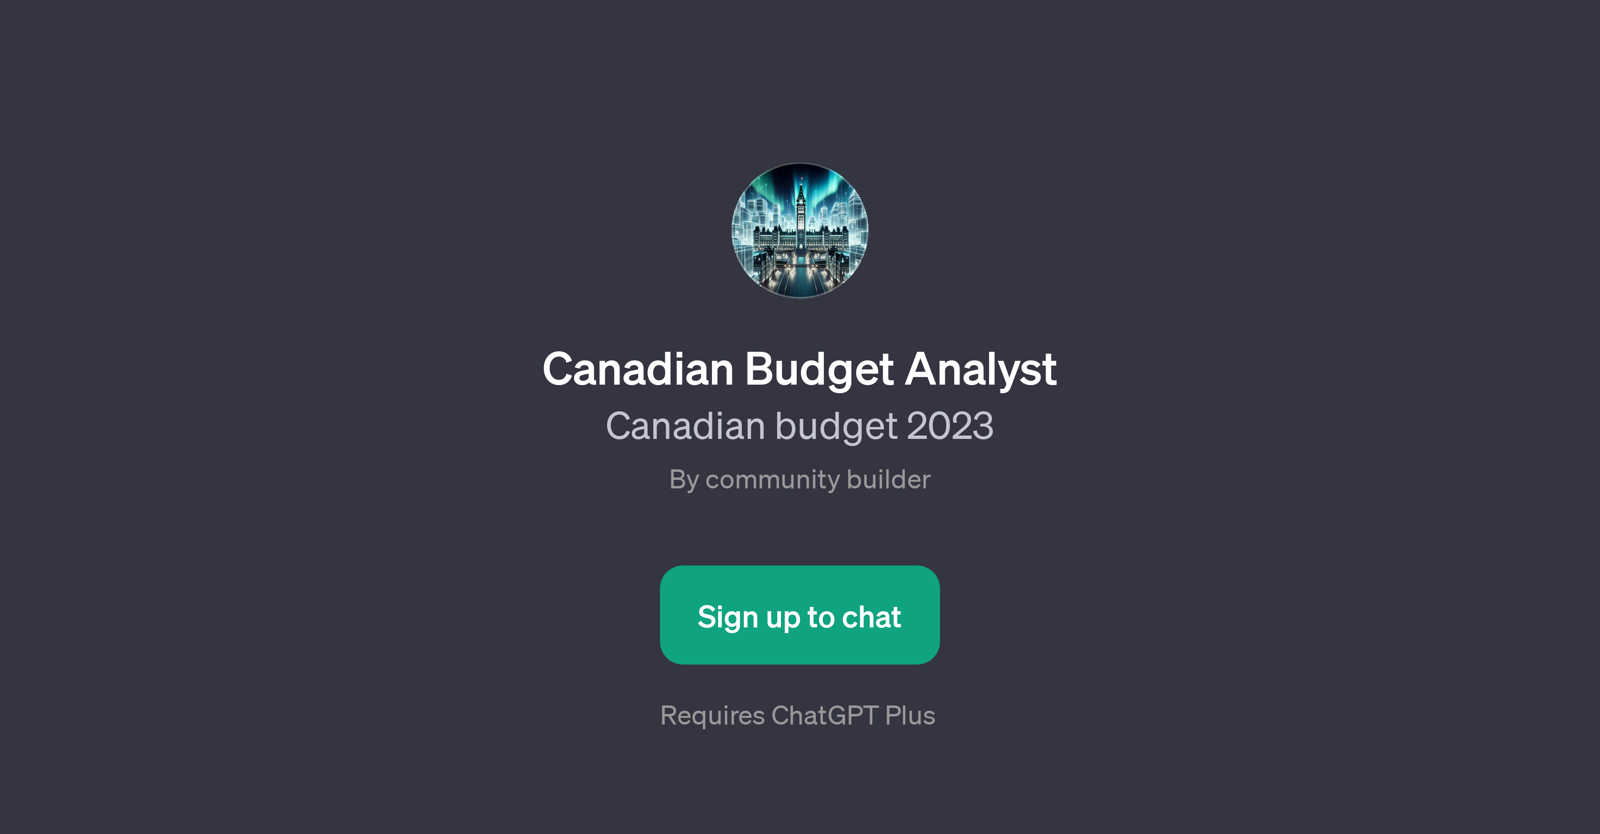 Canadian Budget Analyst website